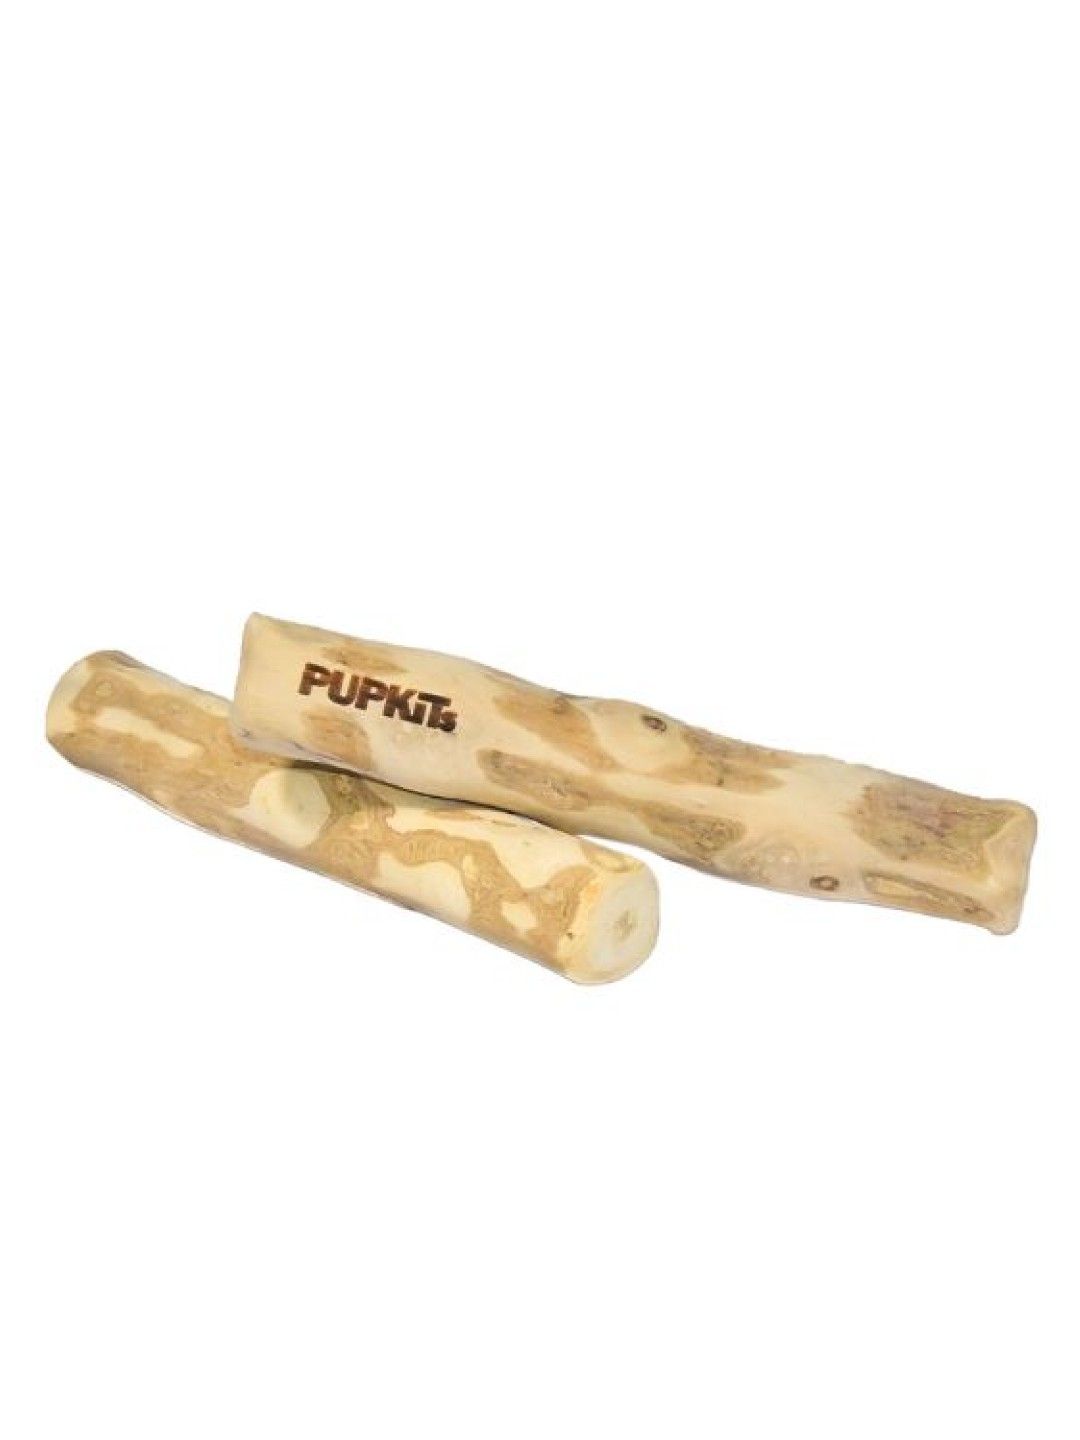 PUPKITS Coffee Wooden Chew Stick - Dog Toy